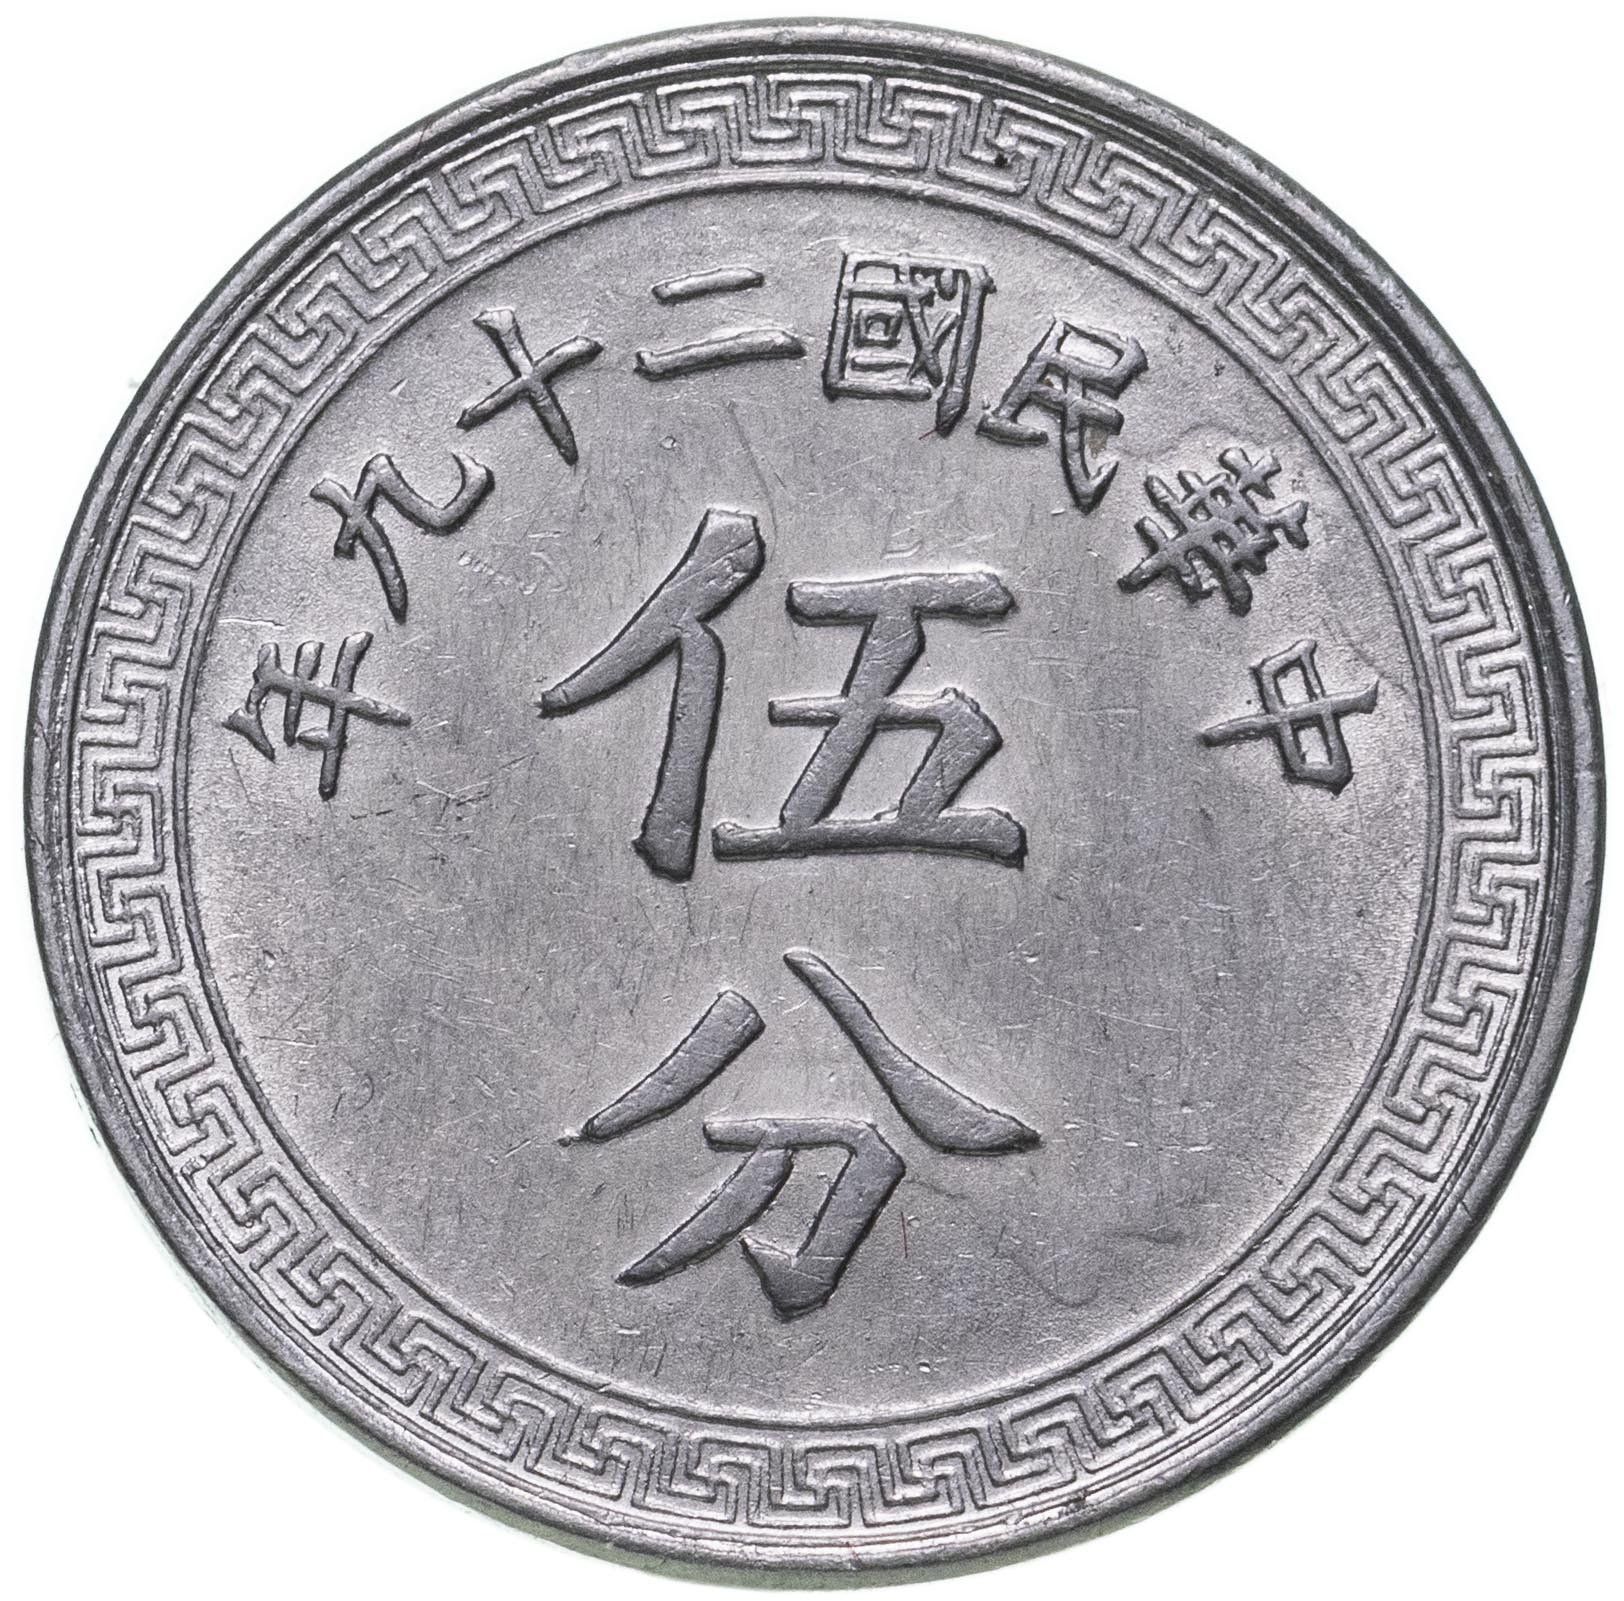 Китайский фынь монета. Монеты Китая фынь. Монета Фень Китай. Китайский фынь 2001.